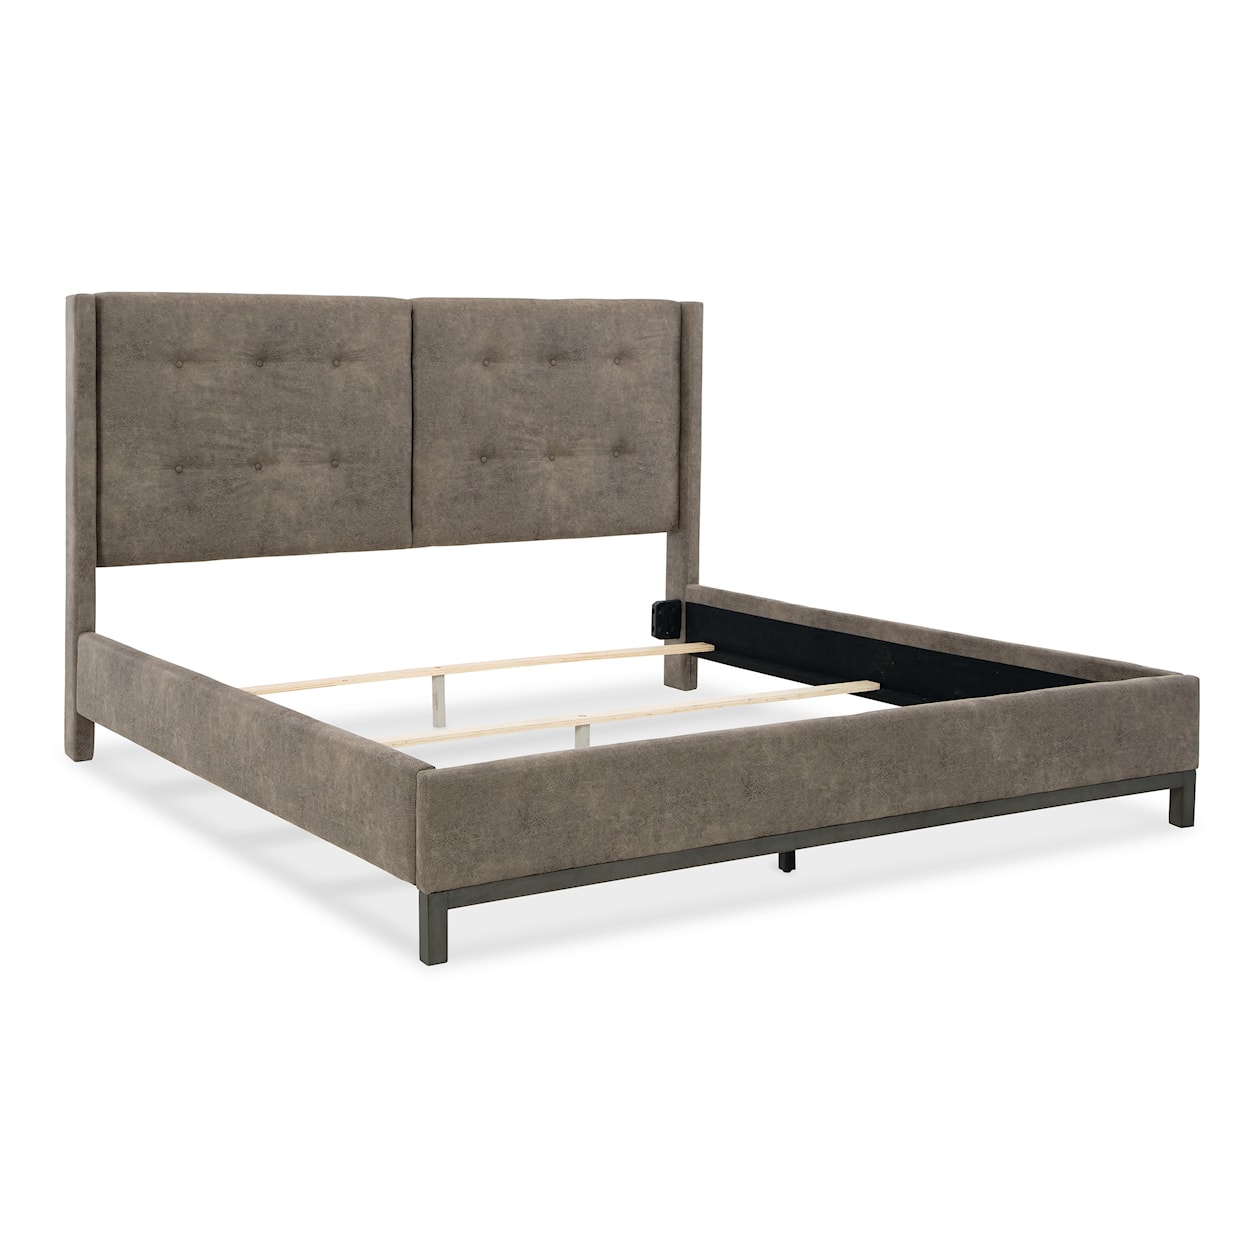 Ashley Furniture Signature Design Wittland King Upholstered Panel Bed